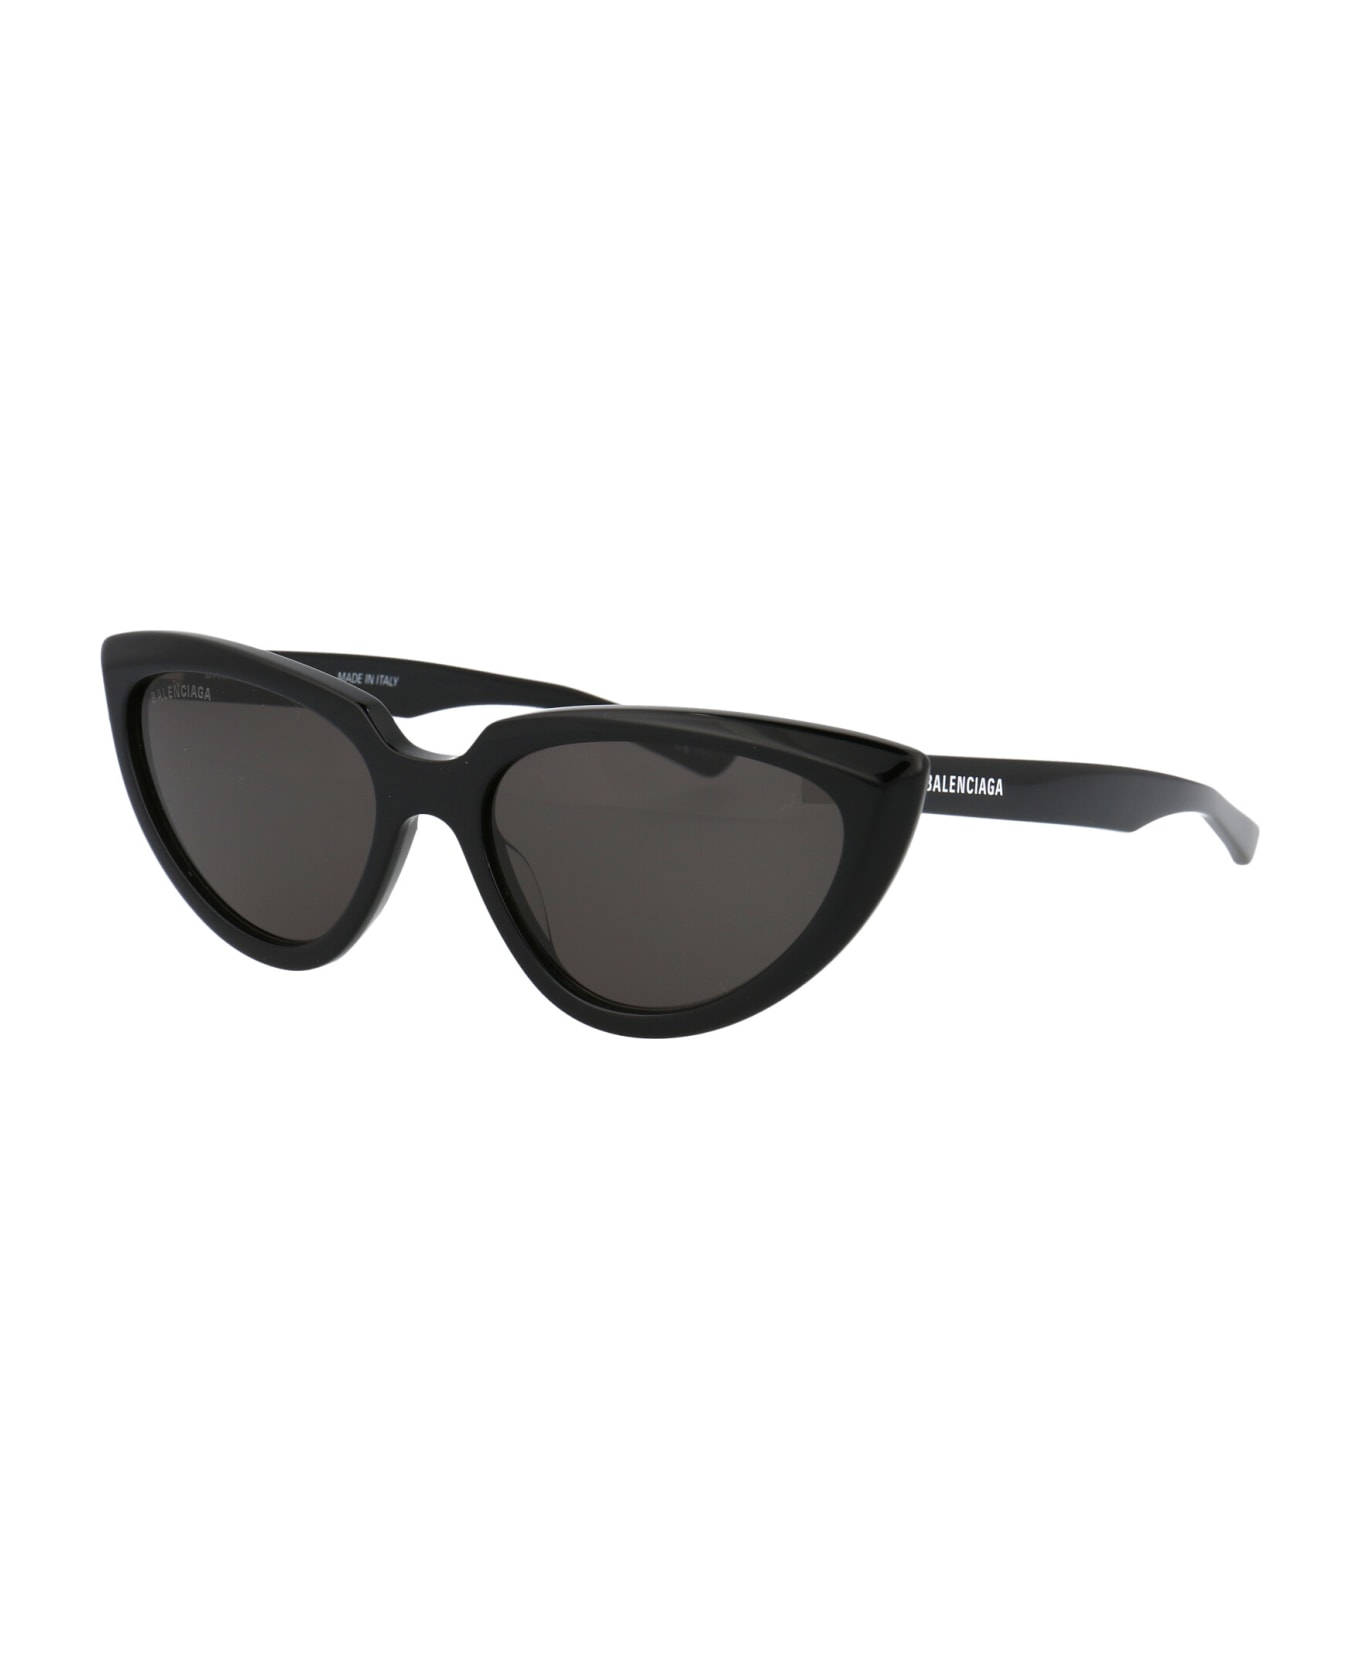 Balenciaga Eyewear Bb0182s Sunglasses - 001 BLACK BLACK GREY